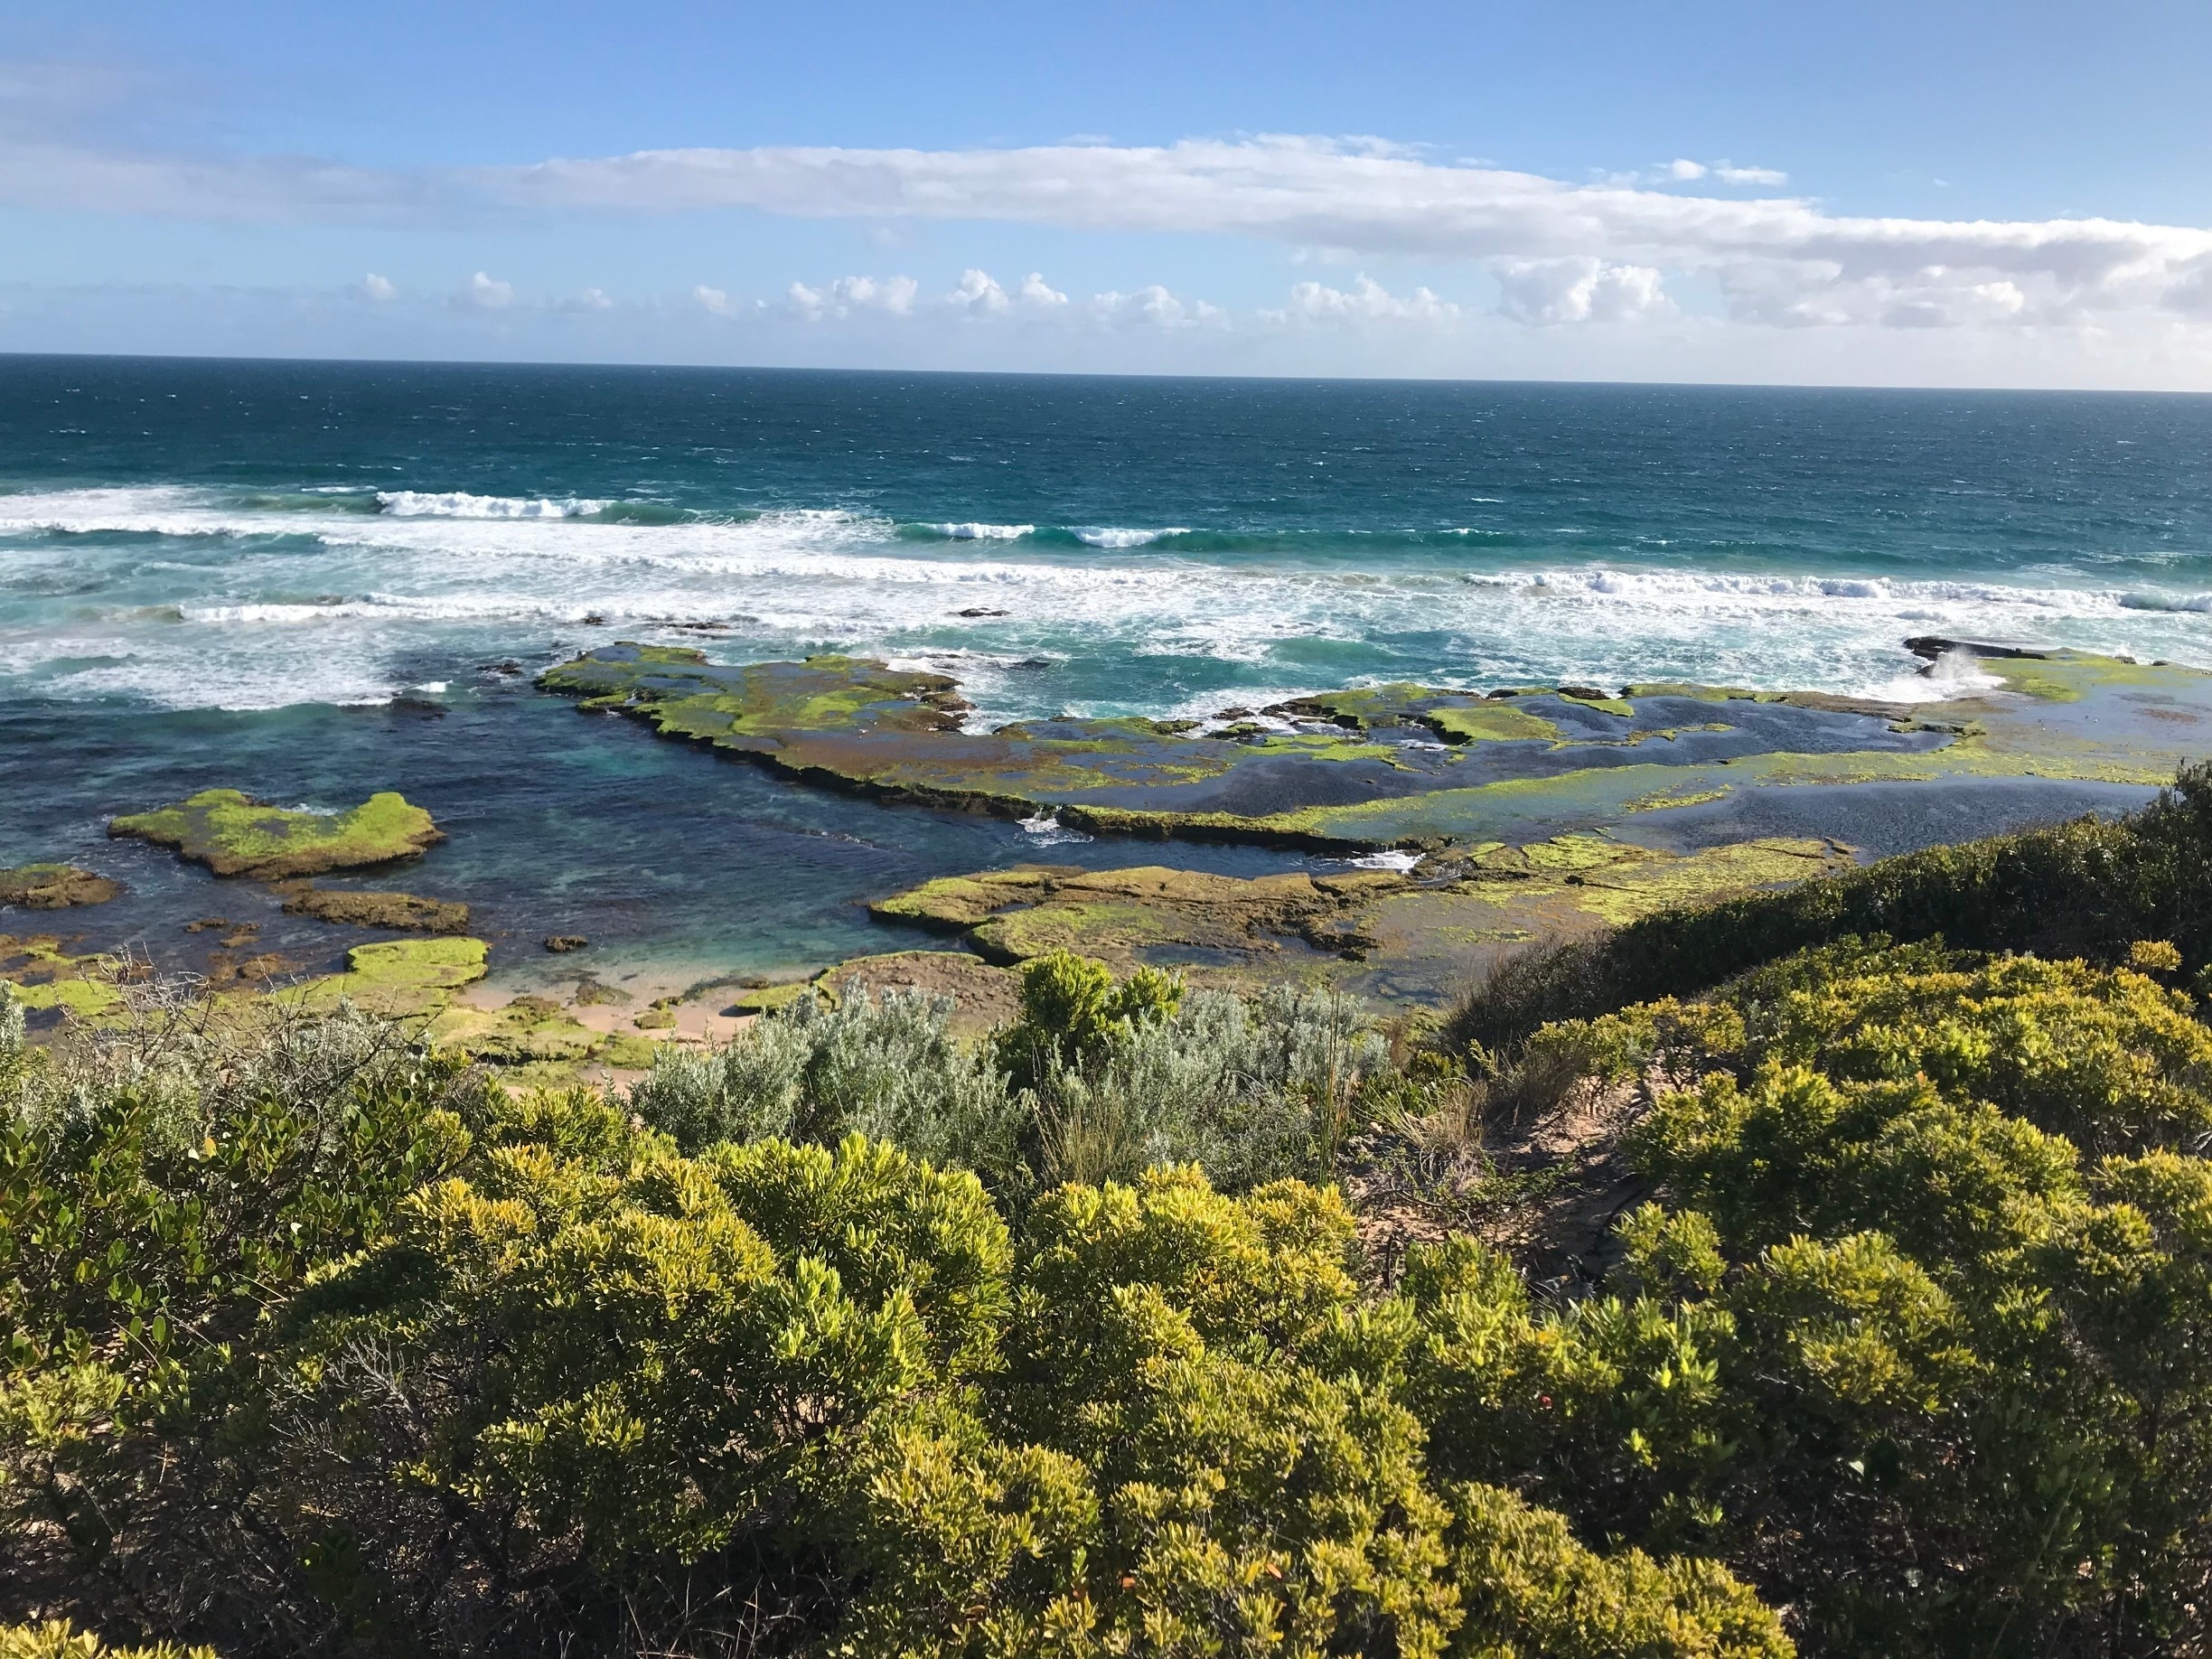 When visiting the Mornington Peninsula, make the time to explore Portsea and the stunning surrounding area! #SMDdoesOZ #MorningtonPeninsula #Australia